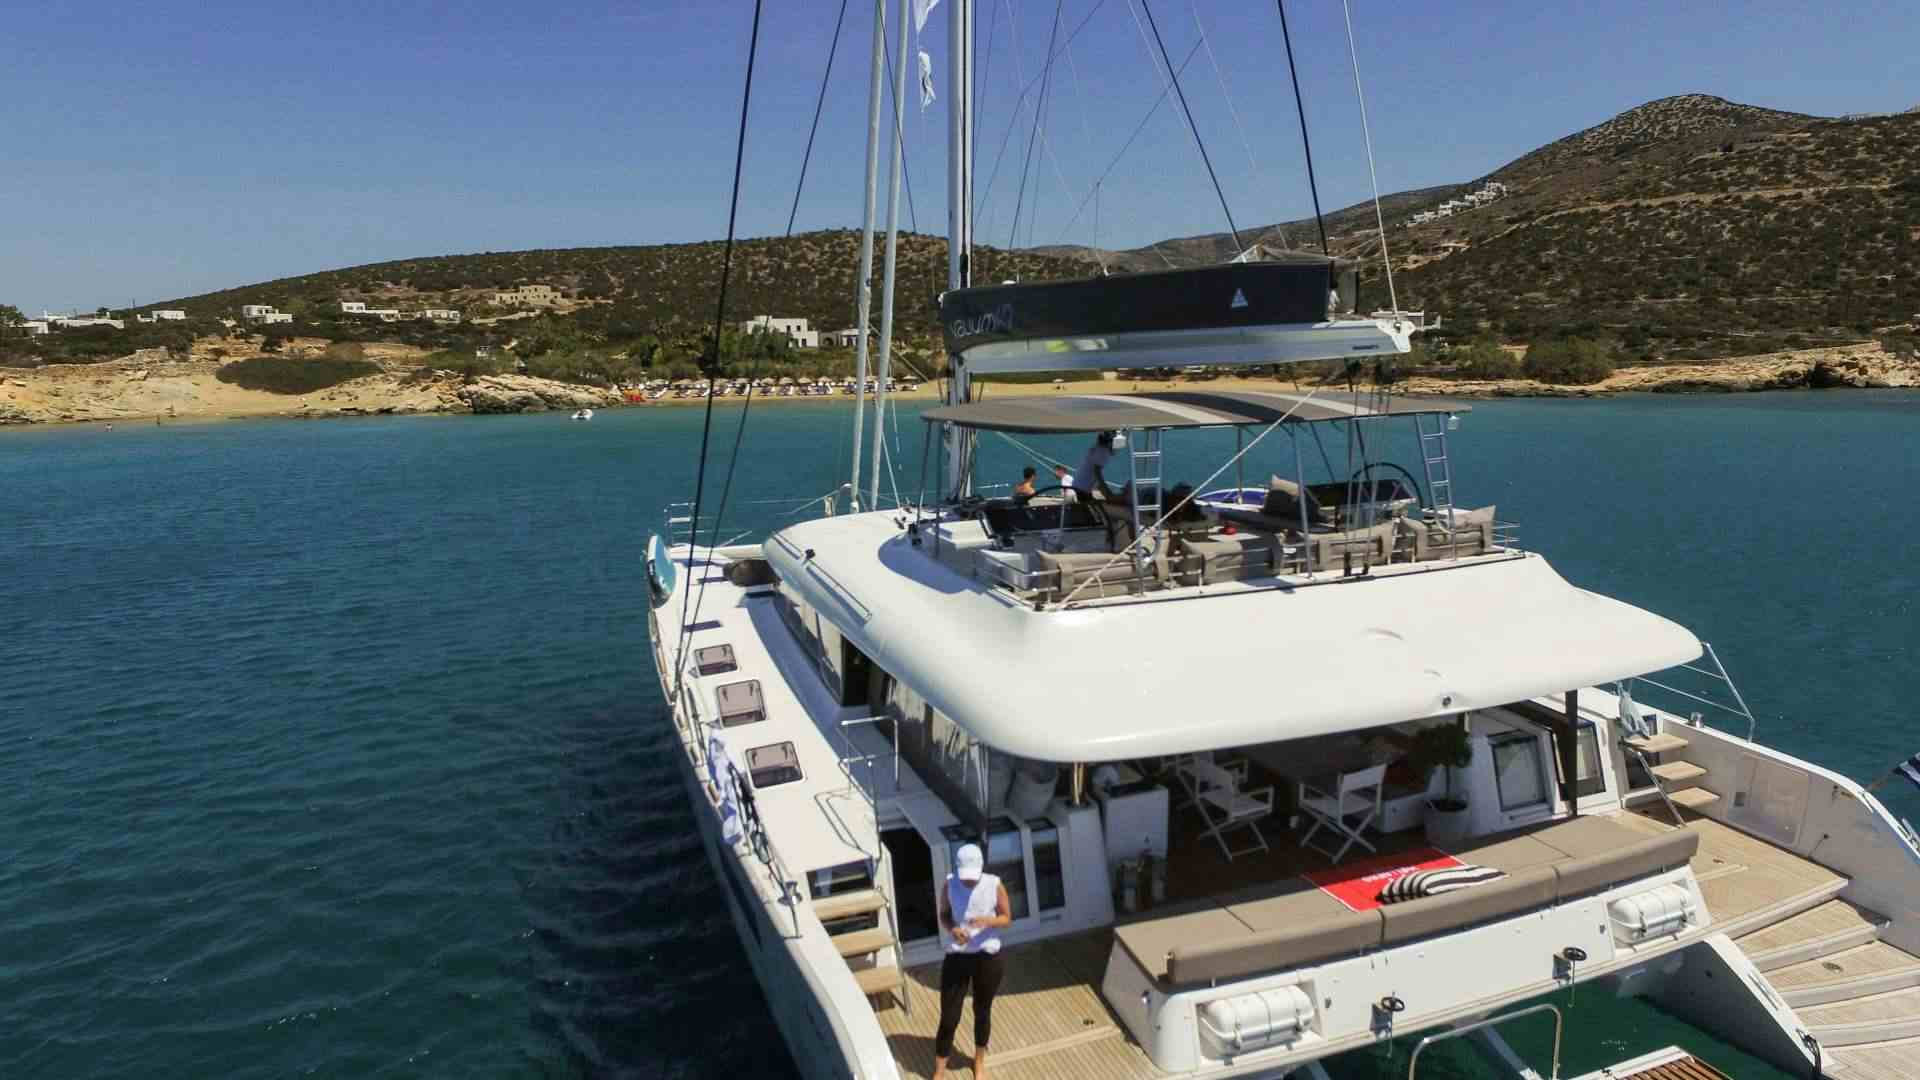 valium62 - Yacht Charter Skiathos & Boat hire in Greece 1